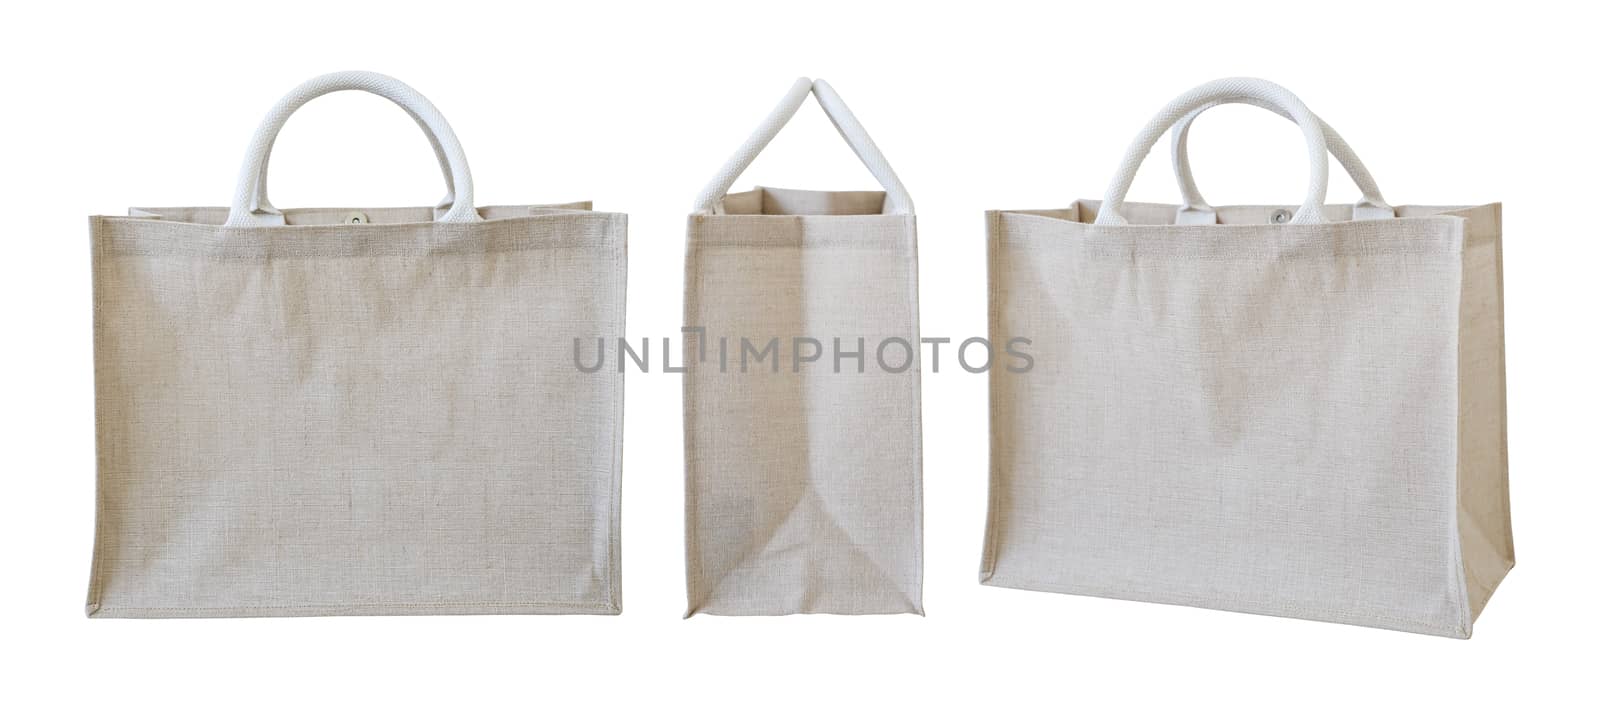 Sackcloth bag isolated on white background